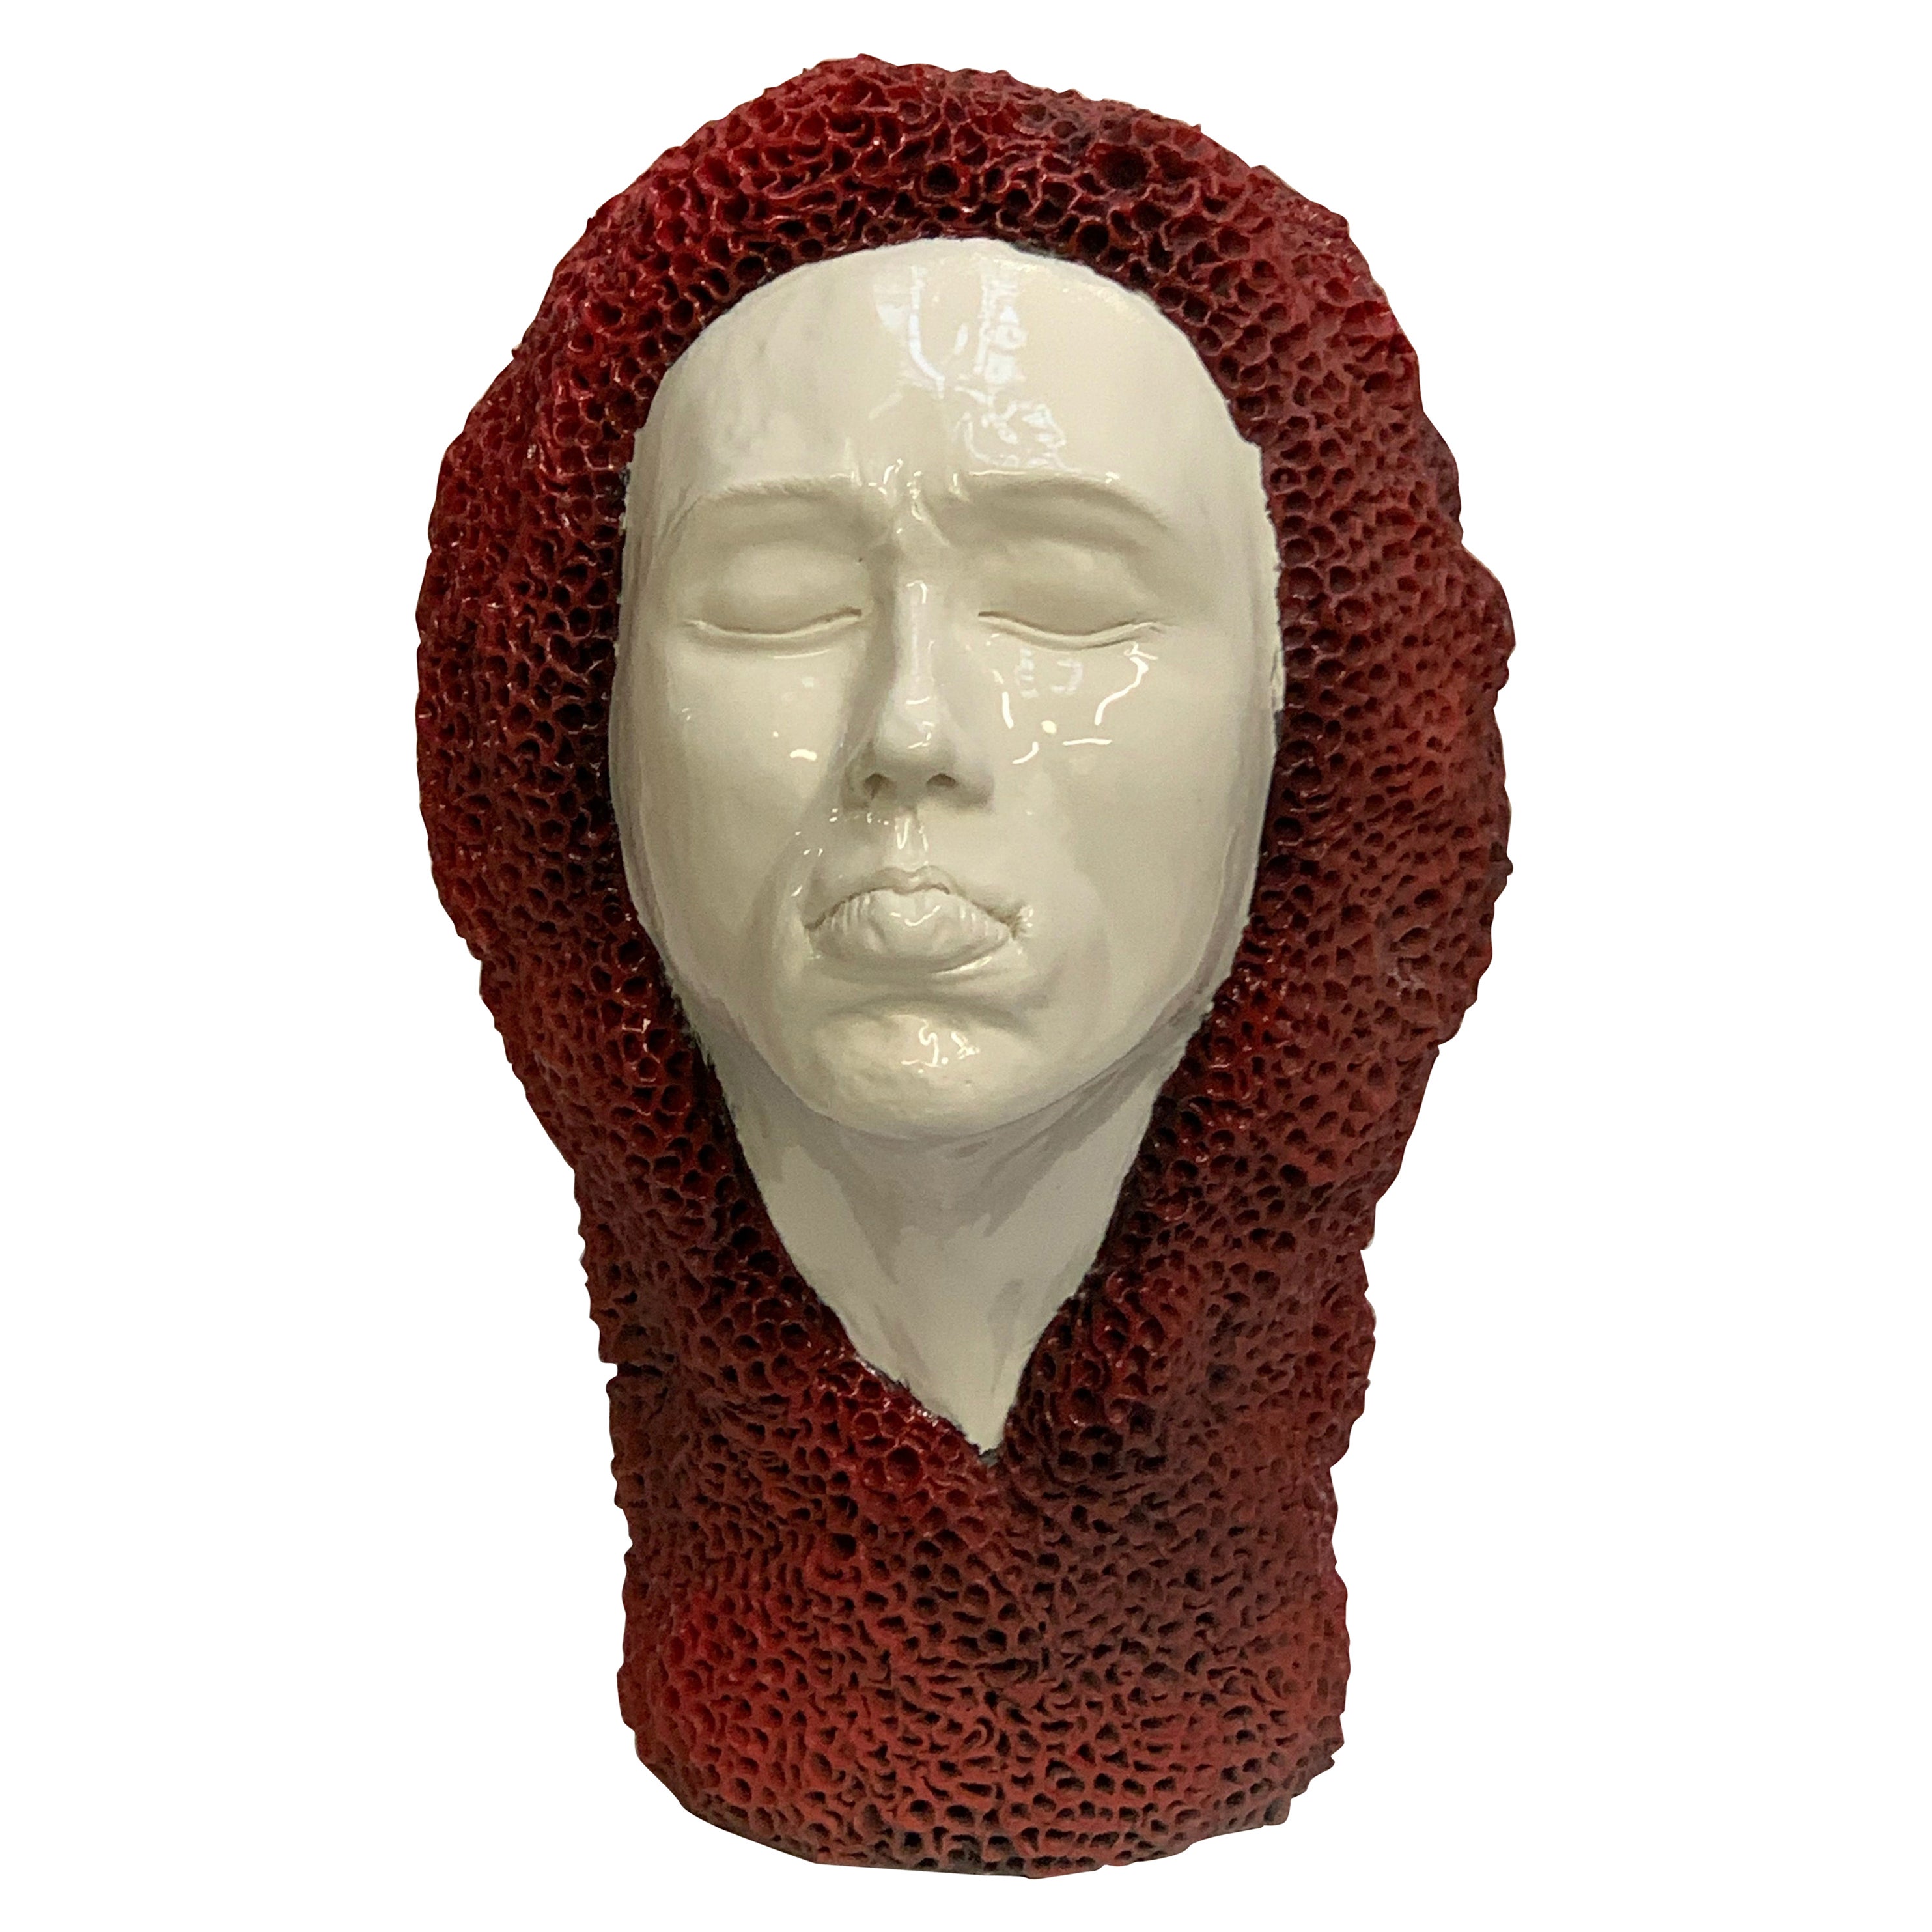 Man's Head Sponge Decorative Ceramic Piece, Handmade Italy, 2021, Hand-Crafted